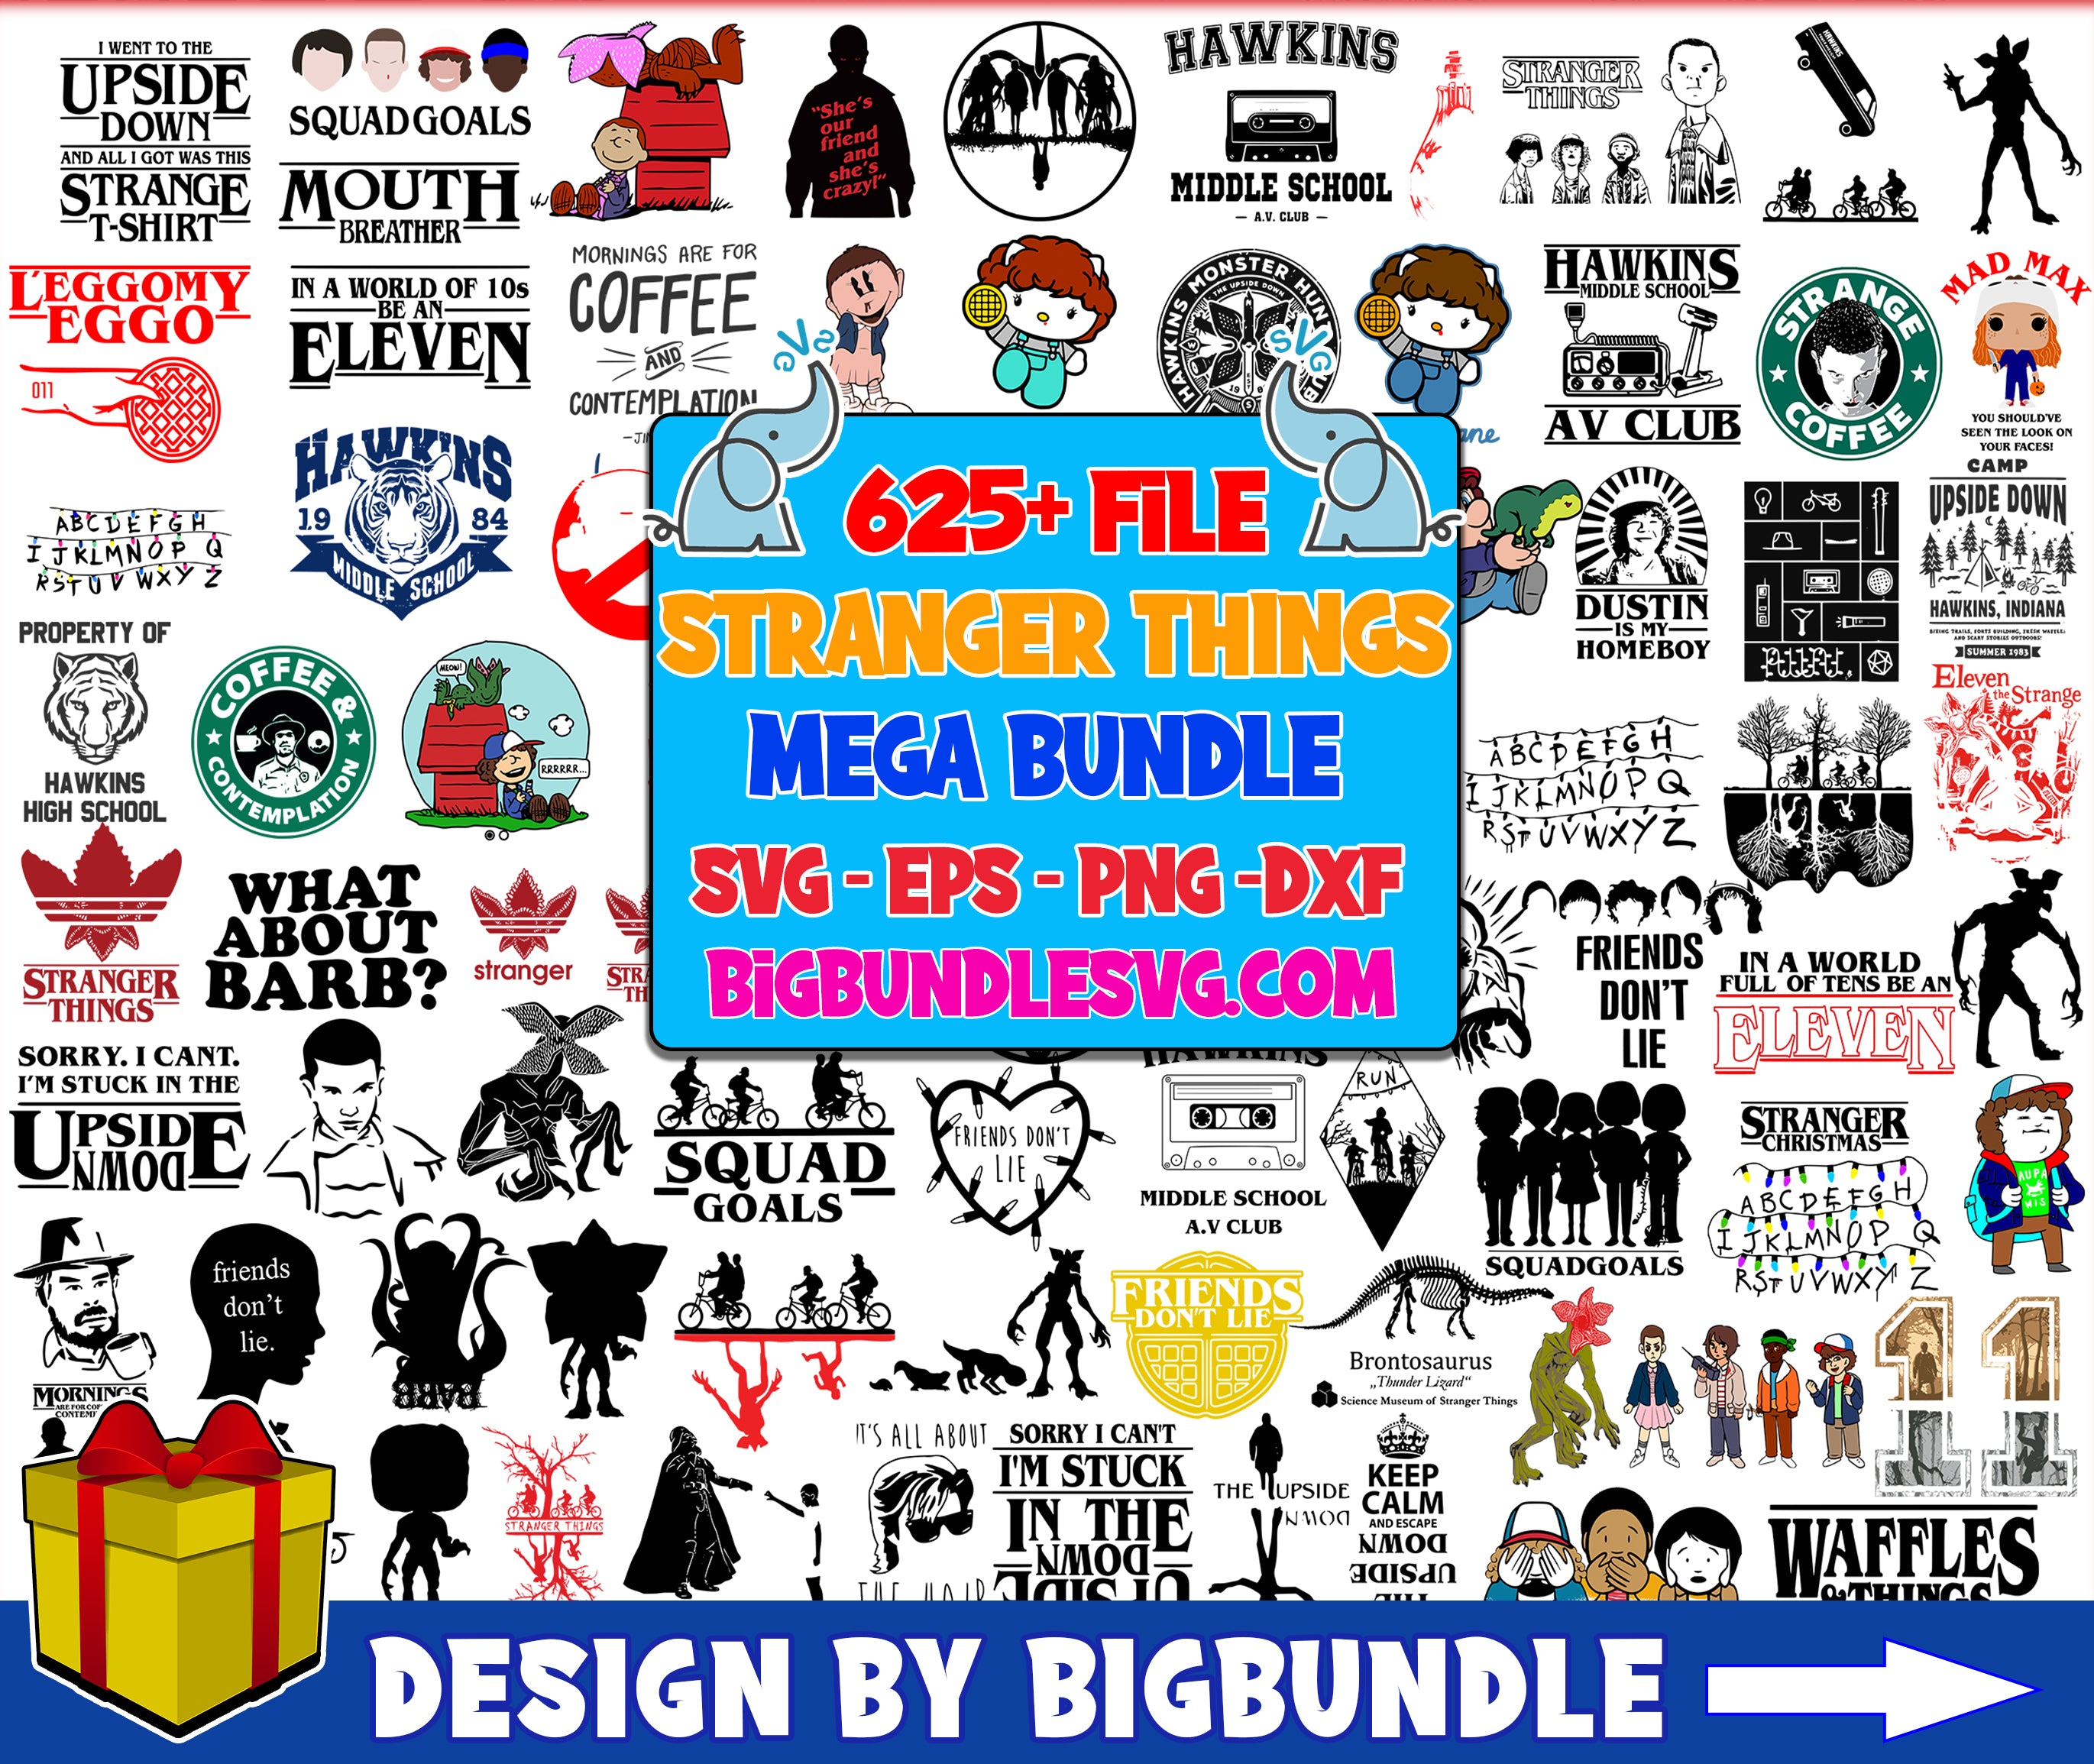 625+ Stranger Things SVG Bundle, Hellfire Club Svg, Stranger Things PN